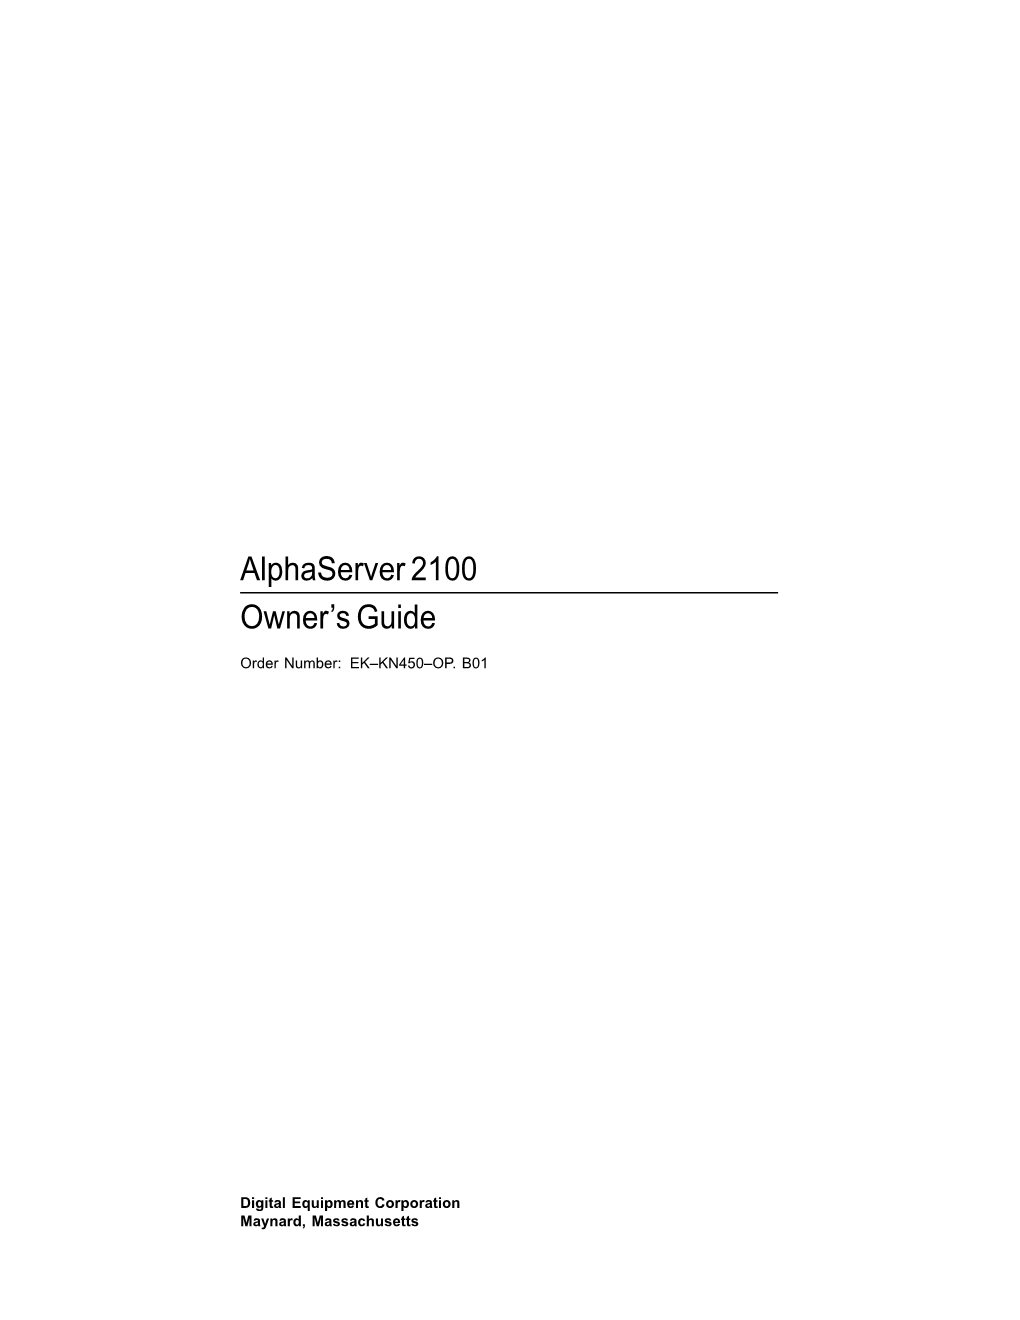 Alphaserver 2100 Owner's Guide